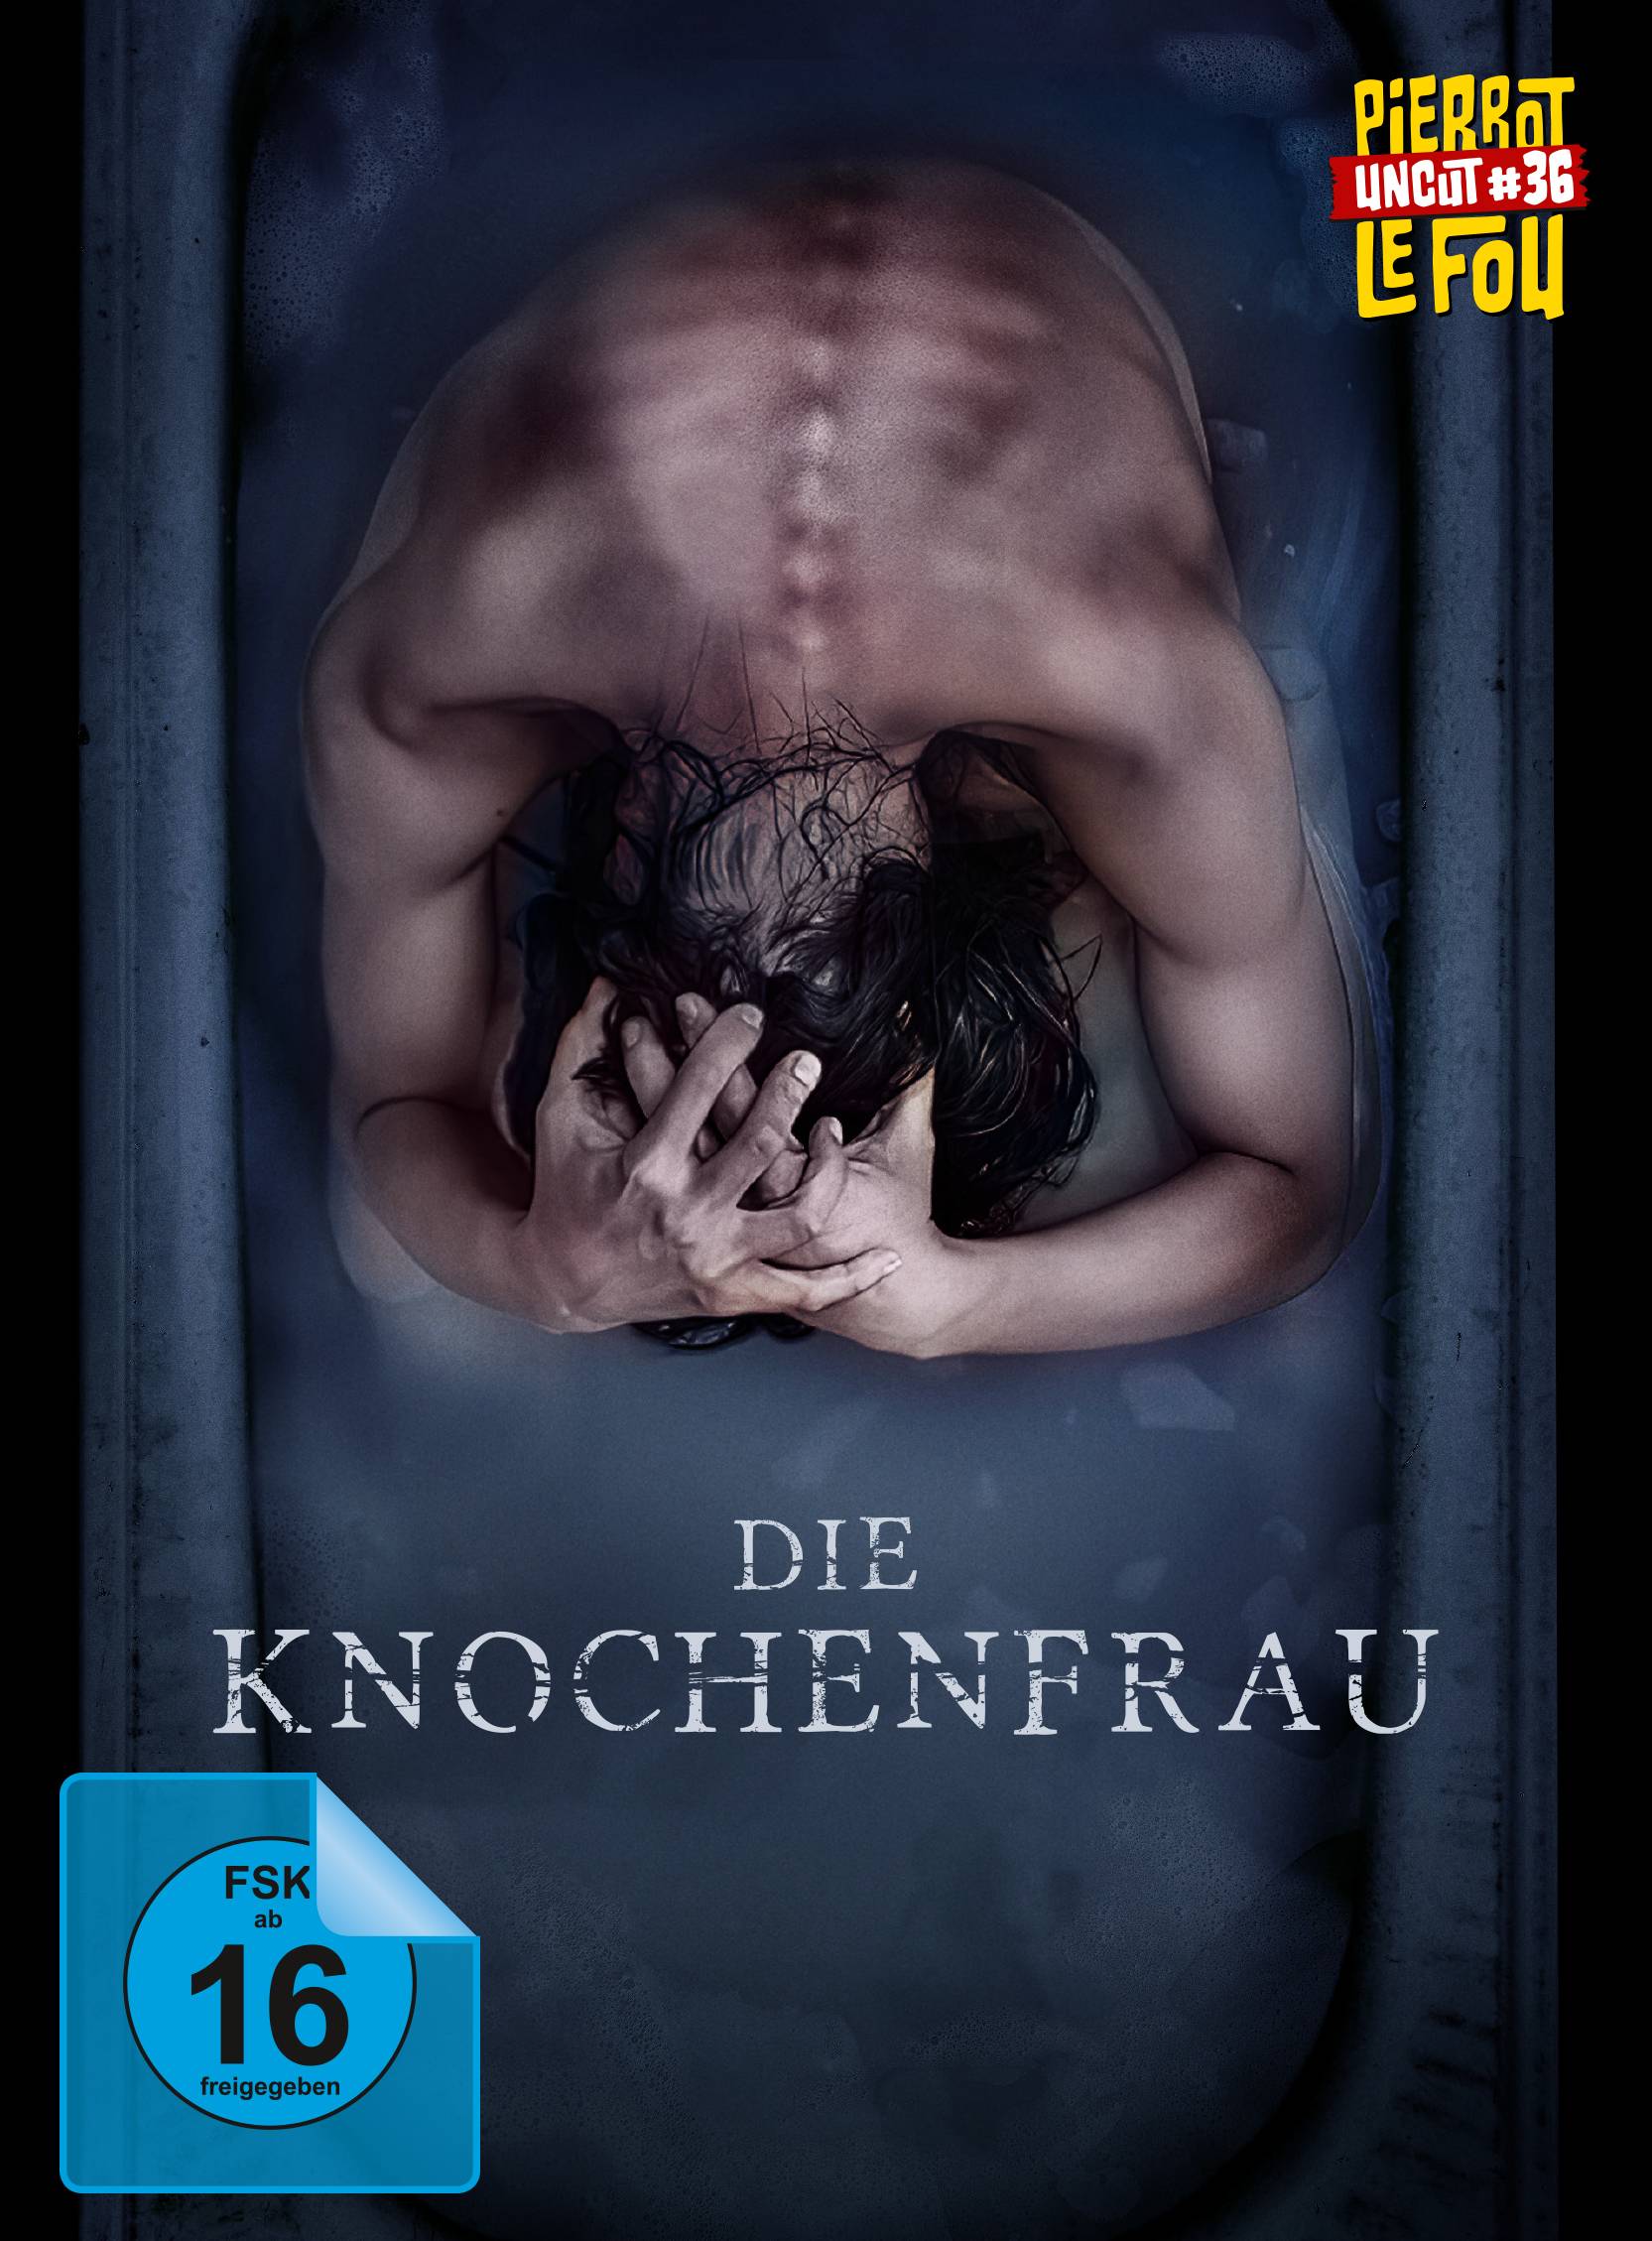 Die Knochenfrau - Limited Edition Mediabook (uncut) (Blu-ray + DVD)